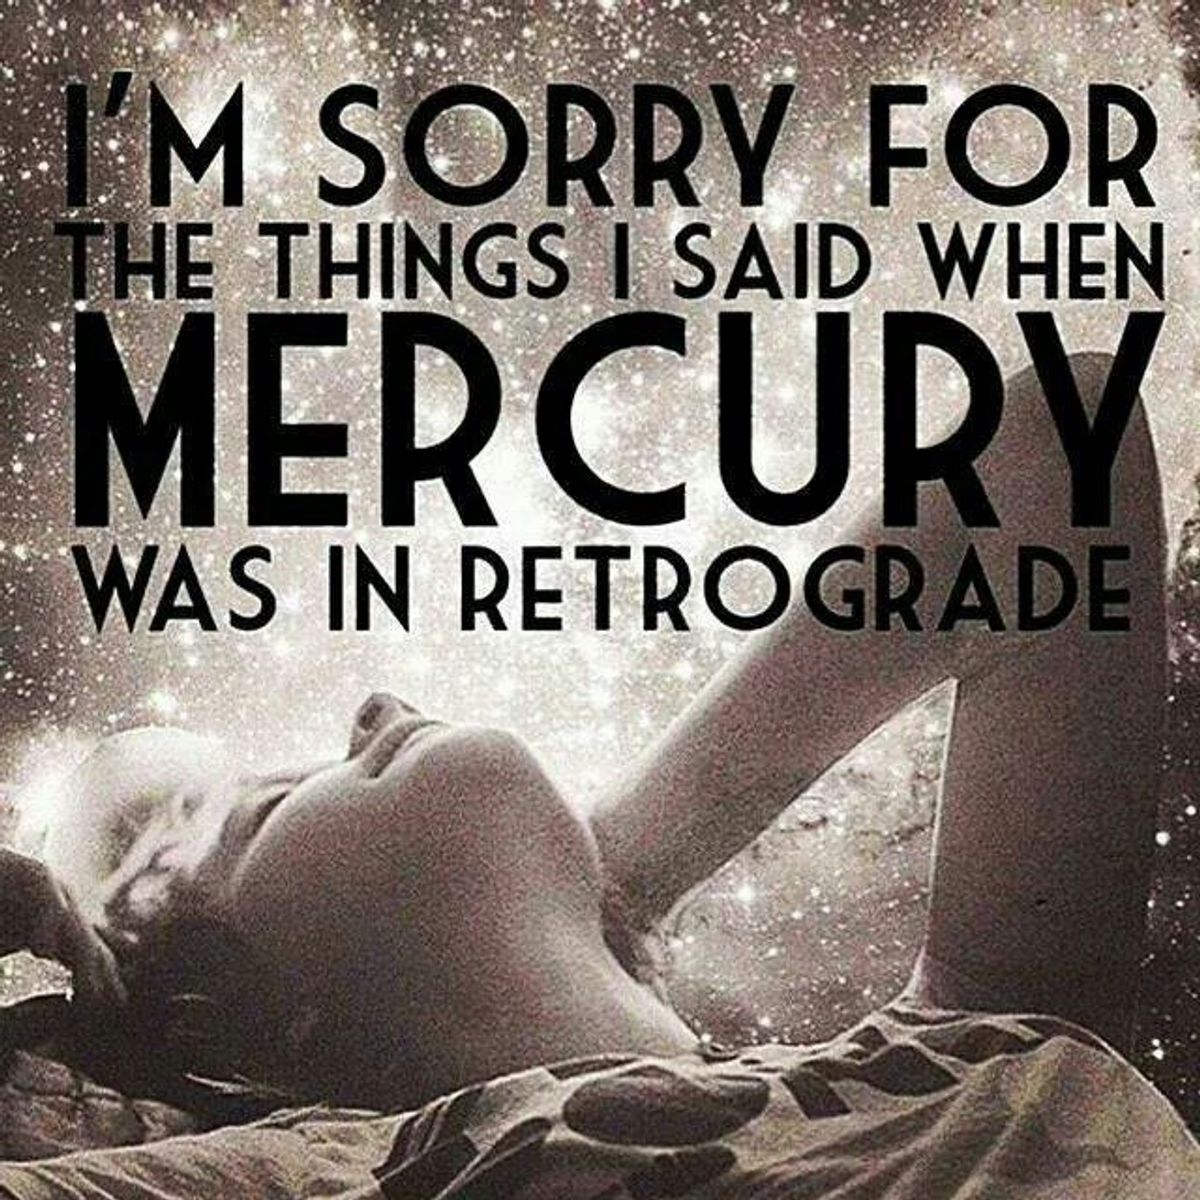 Handling Mercury in Retrograde